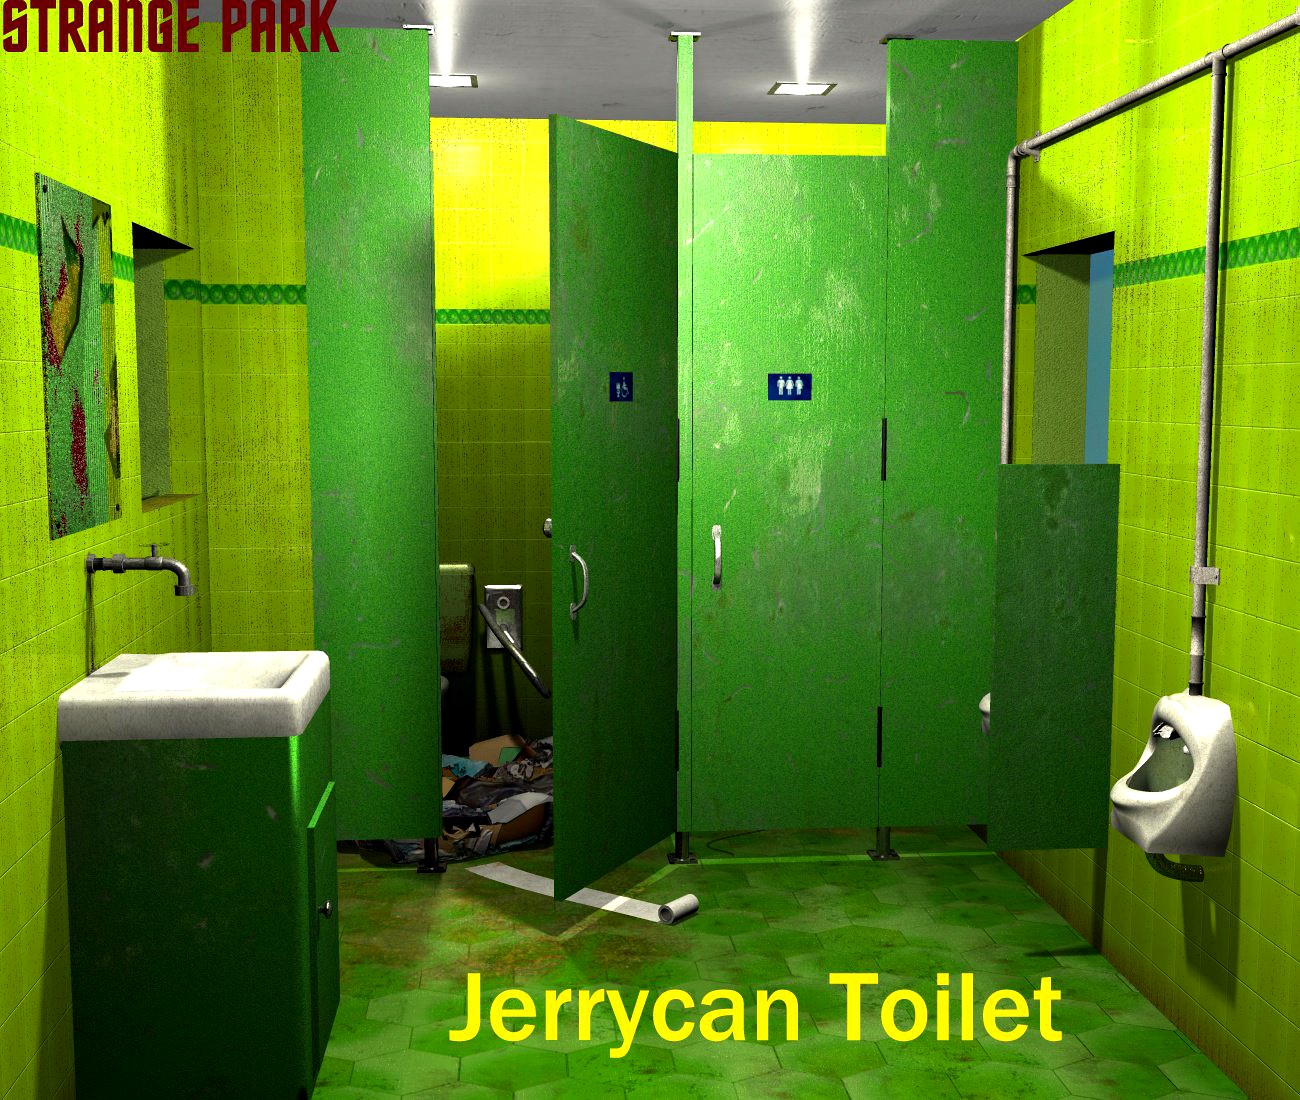 Strange Park - Jerrycan Toilet